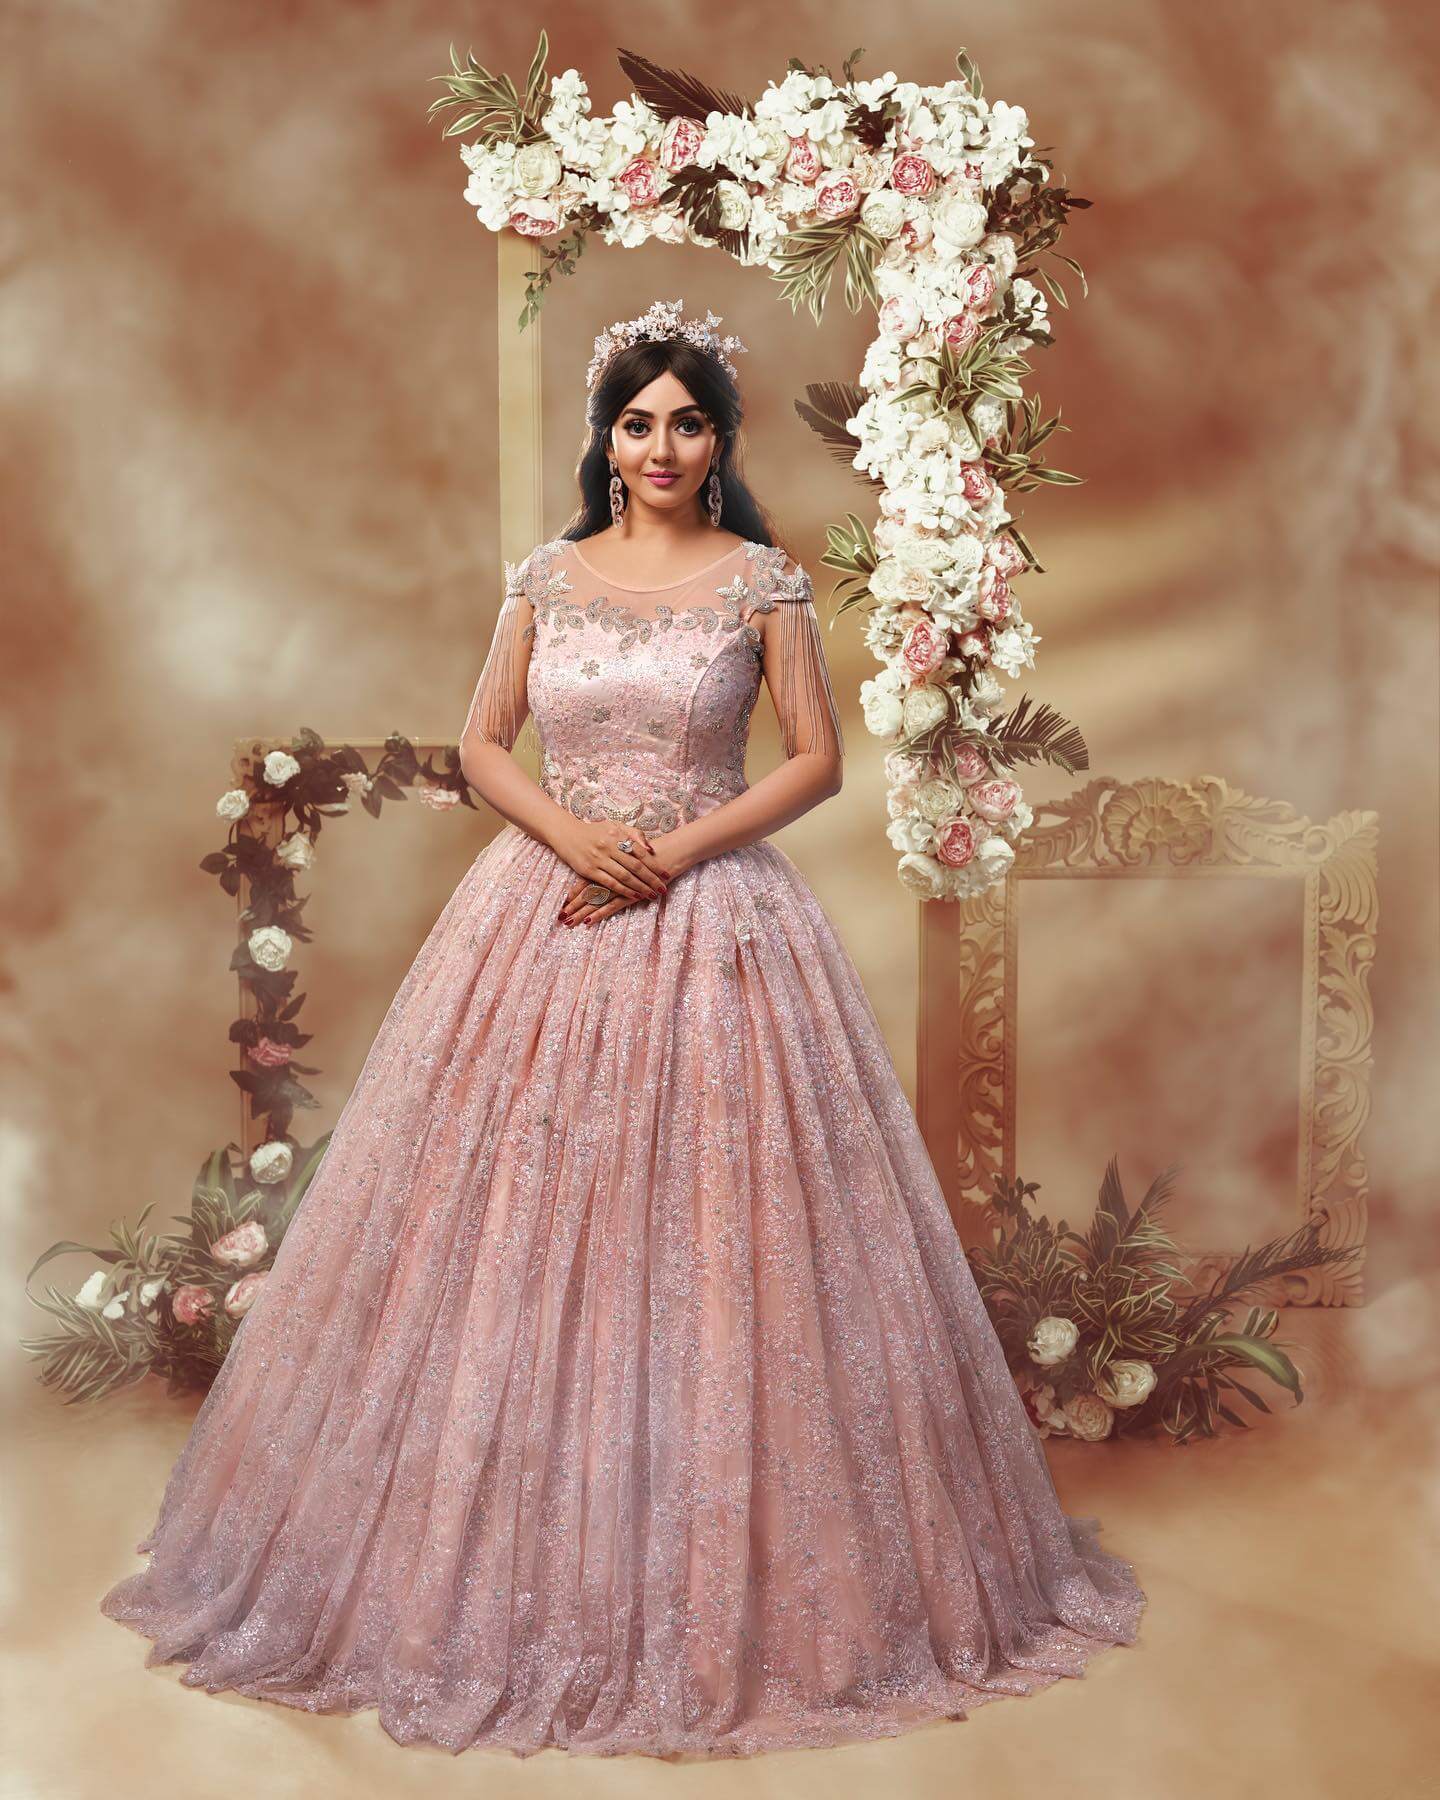 Vidya Pradeep In Glittery Pink Gown Gives Us Enchanting Look